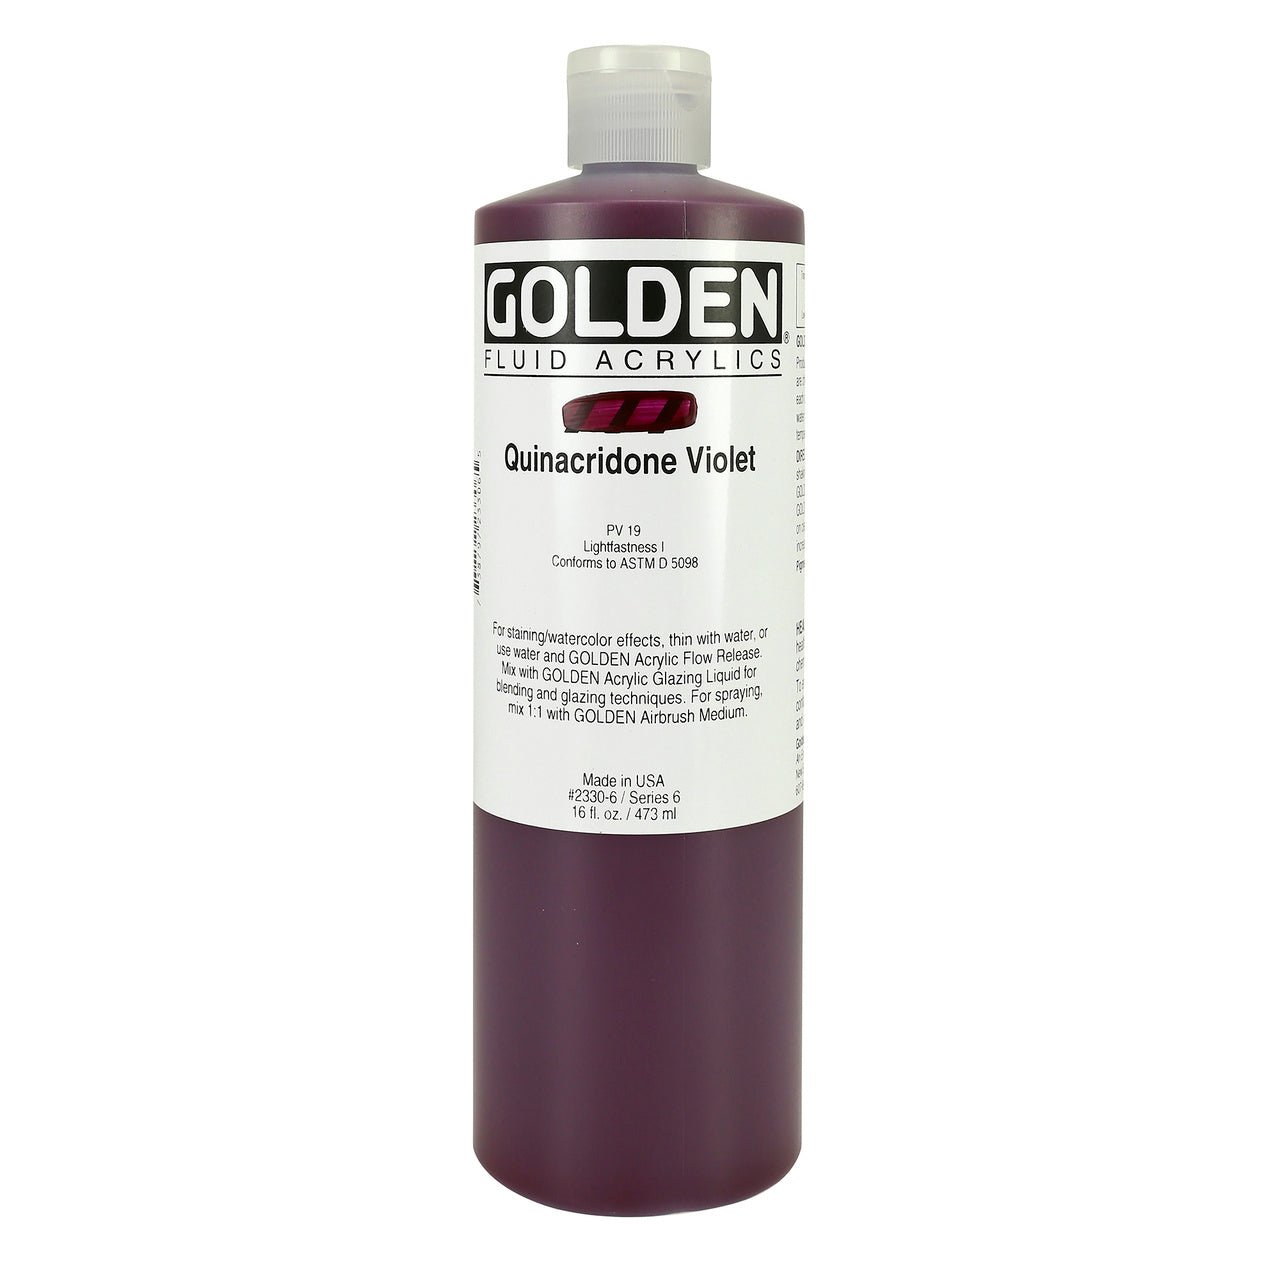 Golden Fluid Acrylic Quinacridone Violet 16 oz - merriartist.com